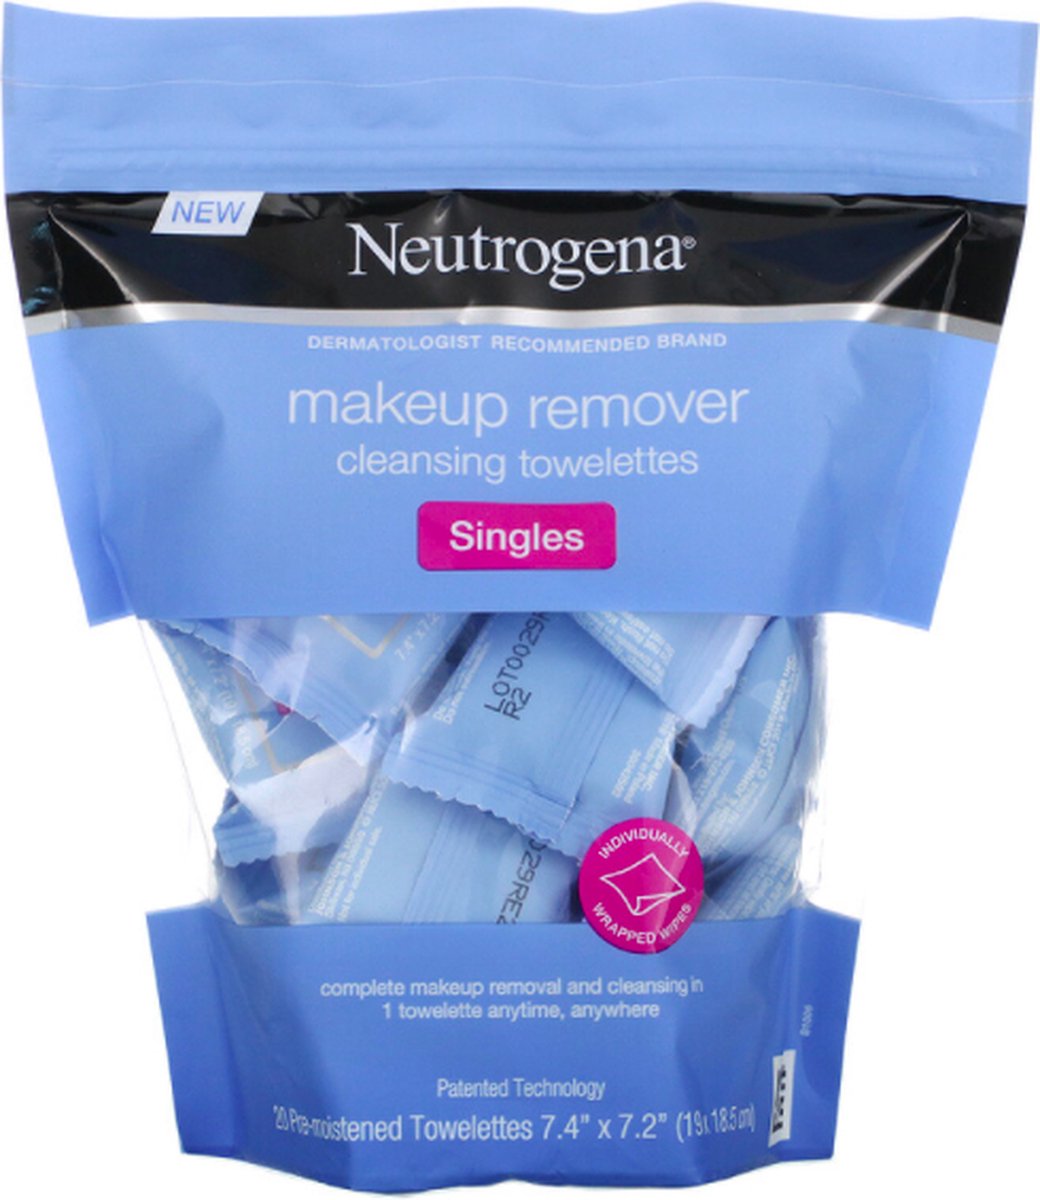 Neutrogena Make-up remover reinigingsdoekjes 20 stuks